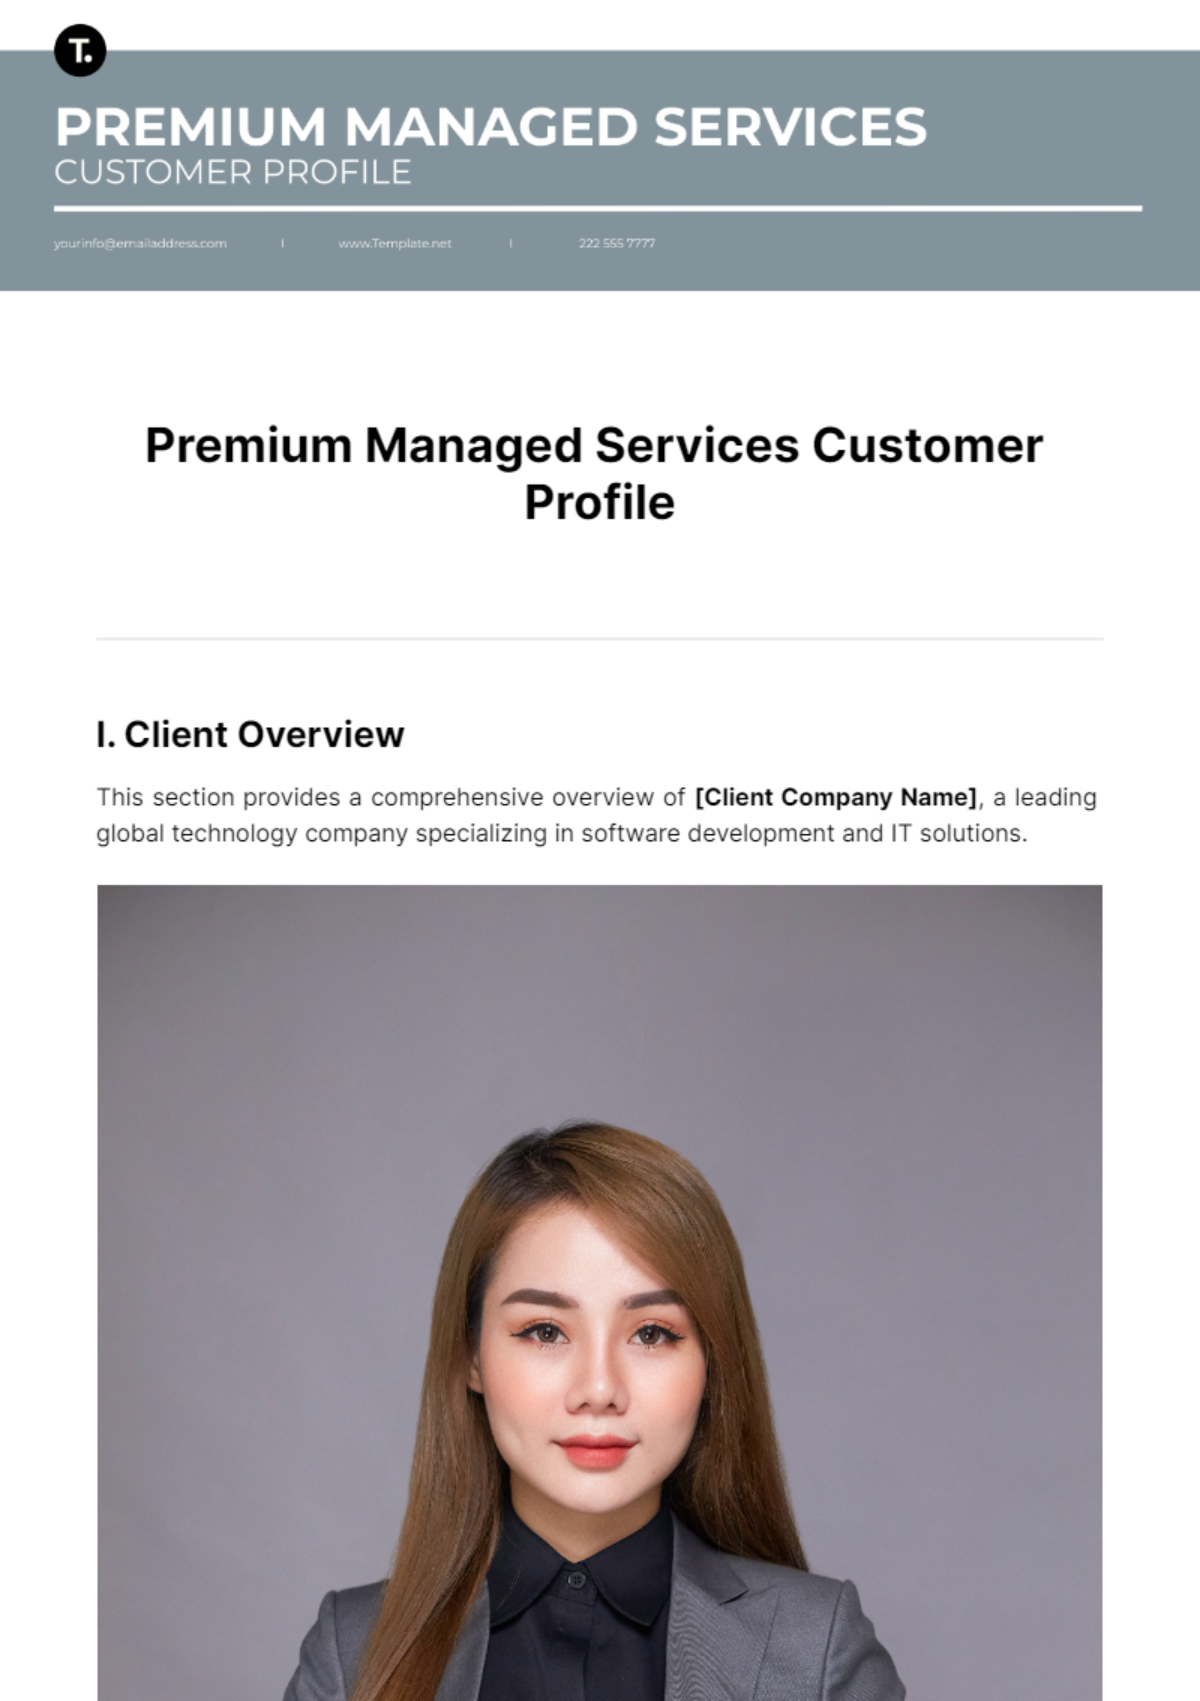 Premium Managed Services Customer Profile Template